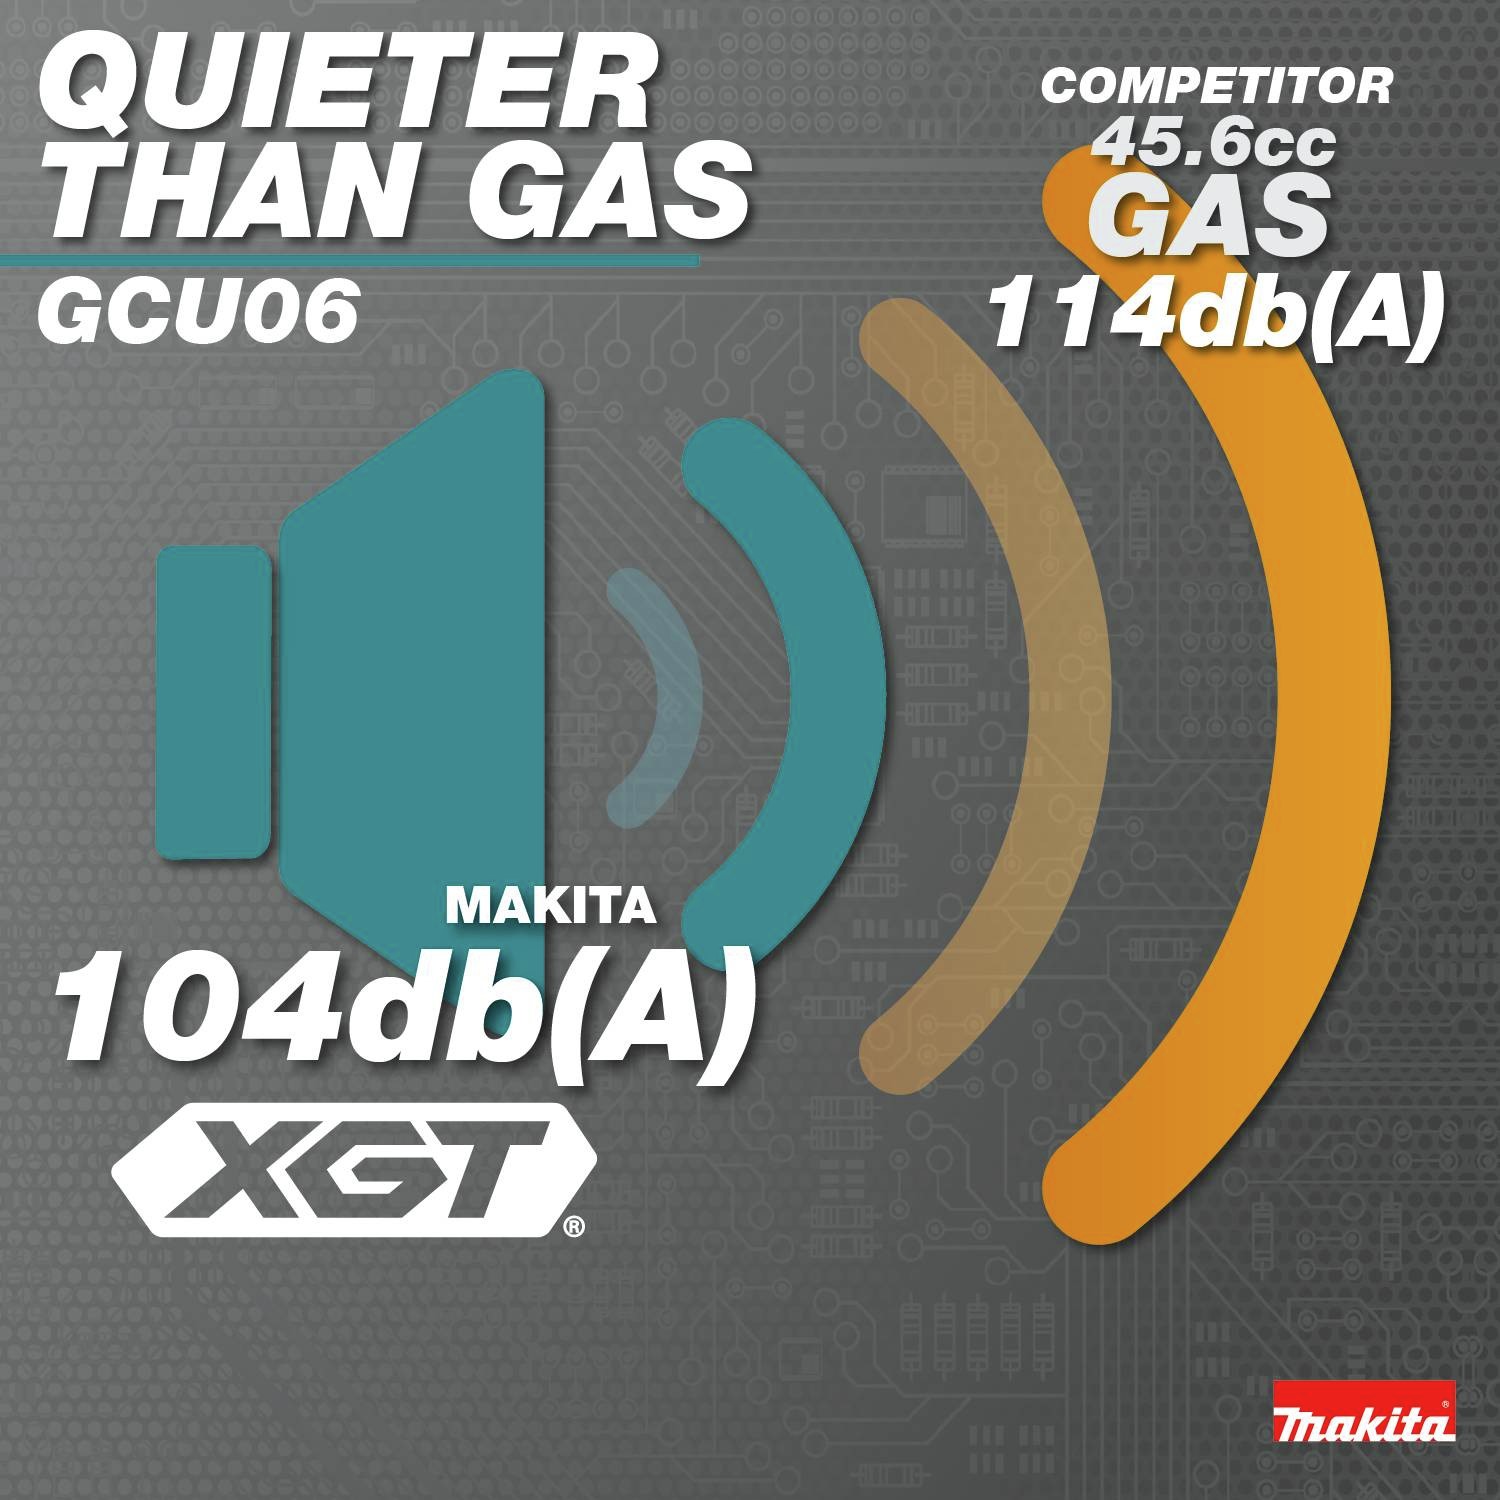 Quieter than Gas: Makita 104 dB(A) vs Competitor 45cc Gas 114 dB(A)